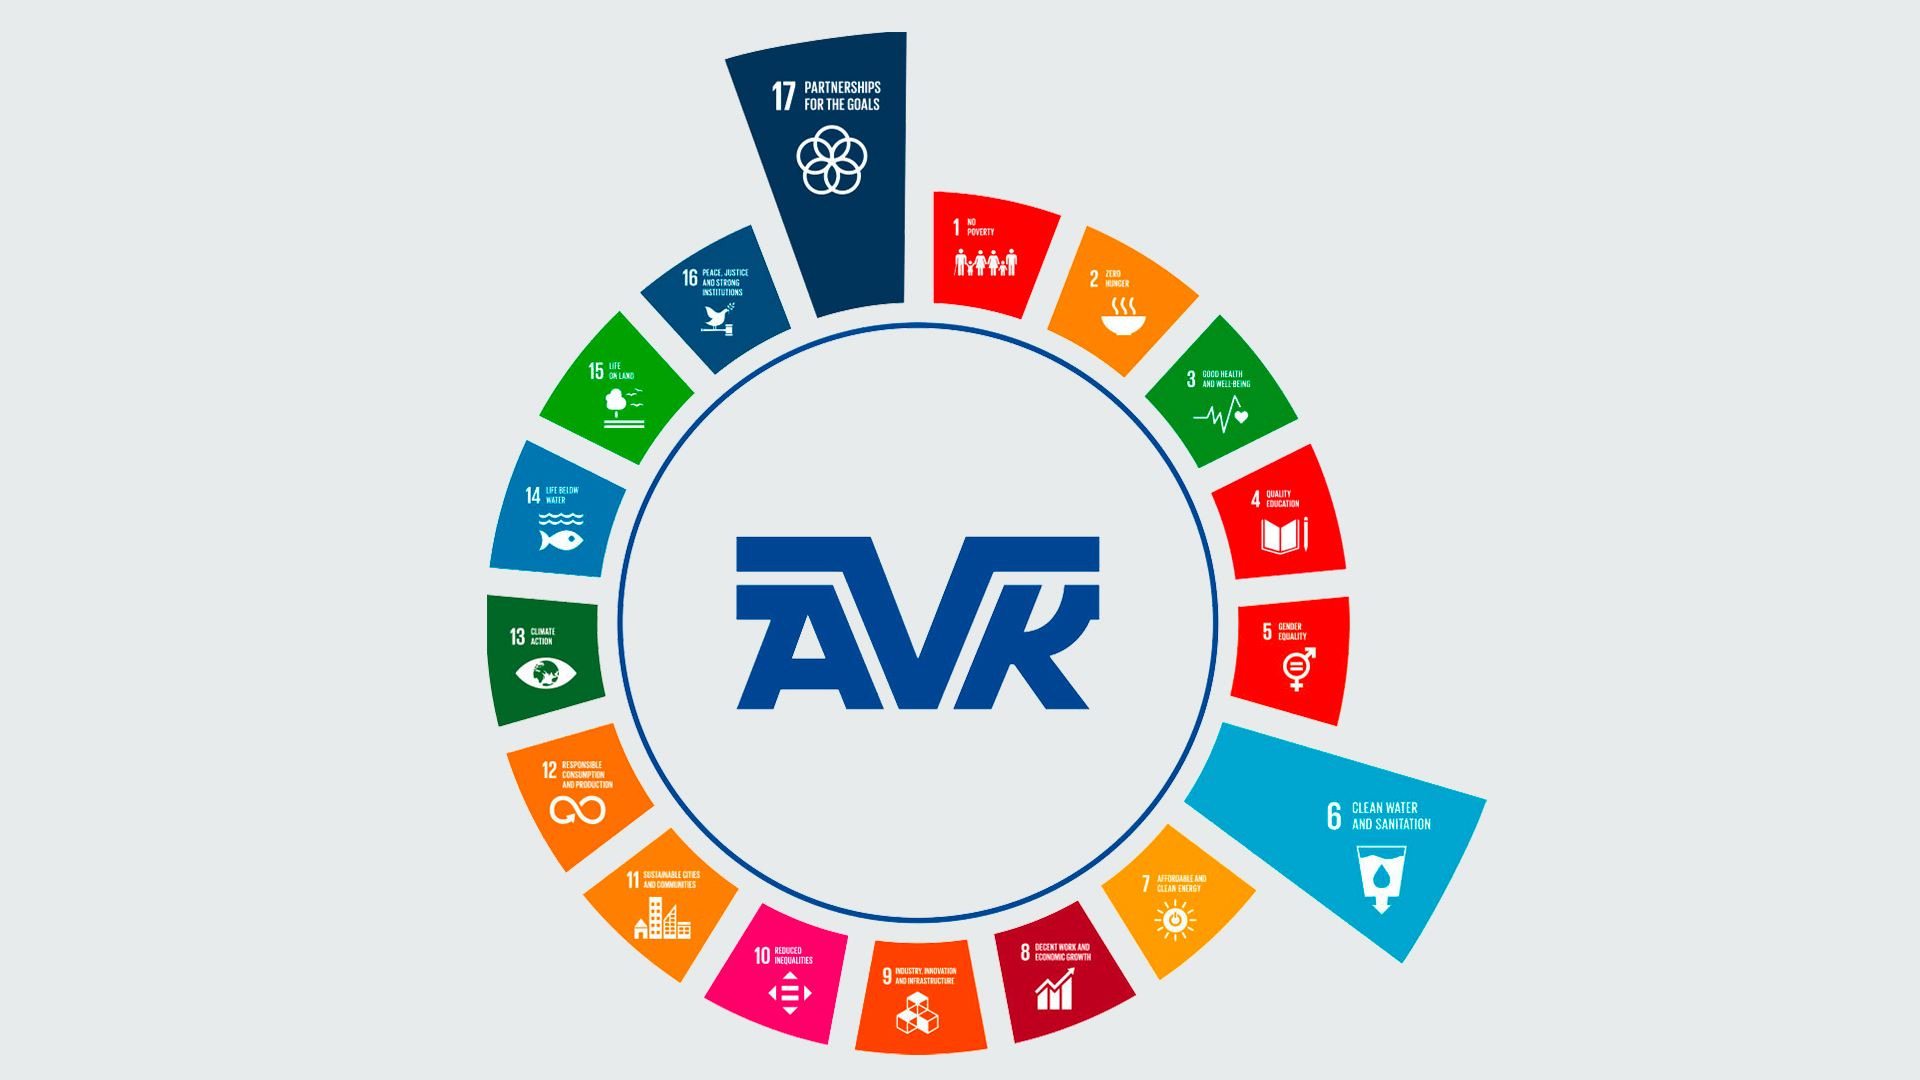 AVK adapts to the UN sustainability development goals